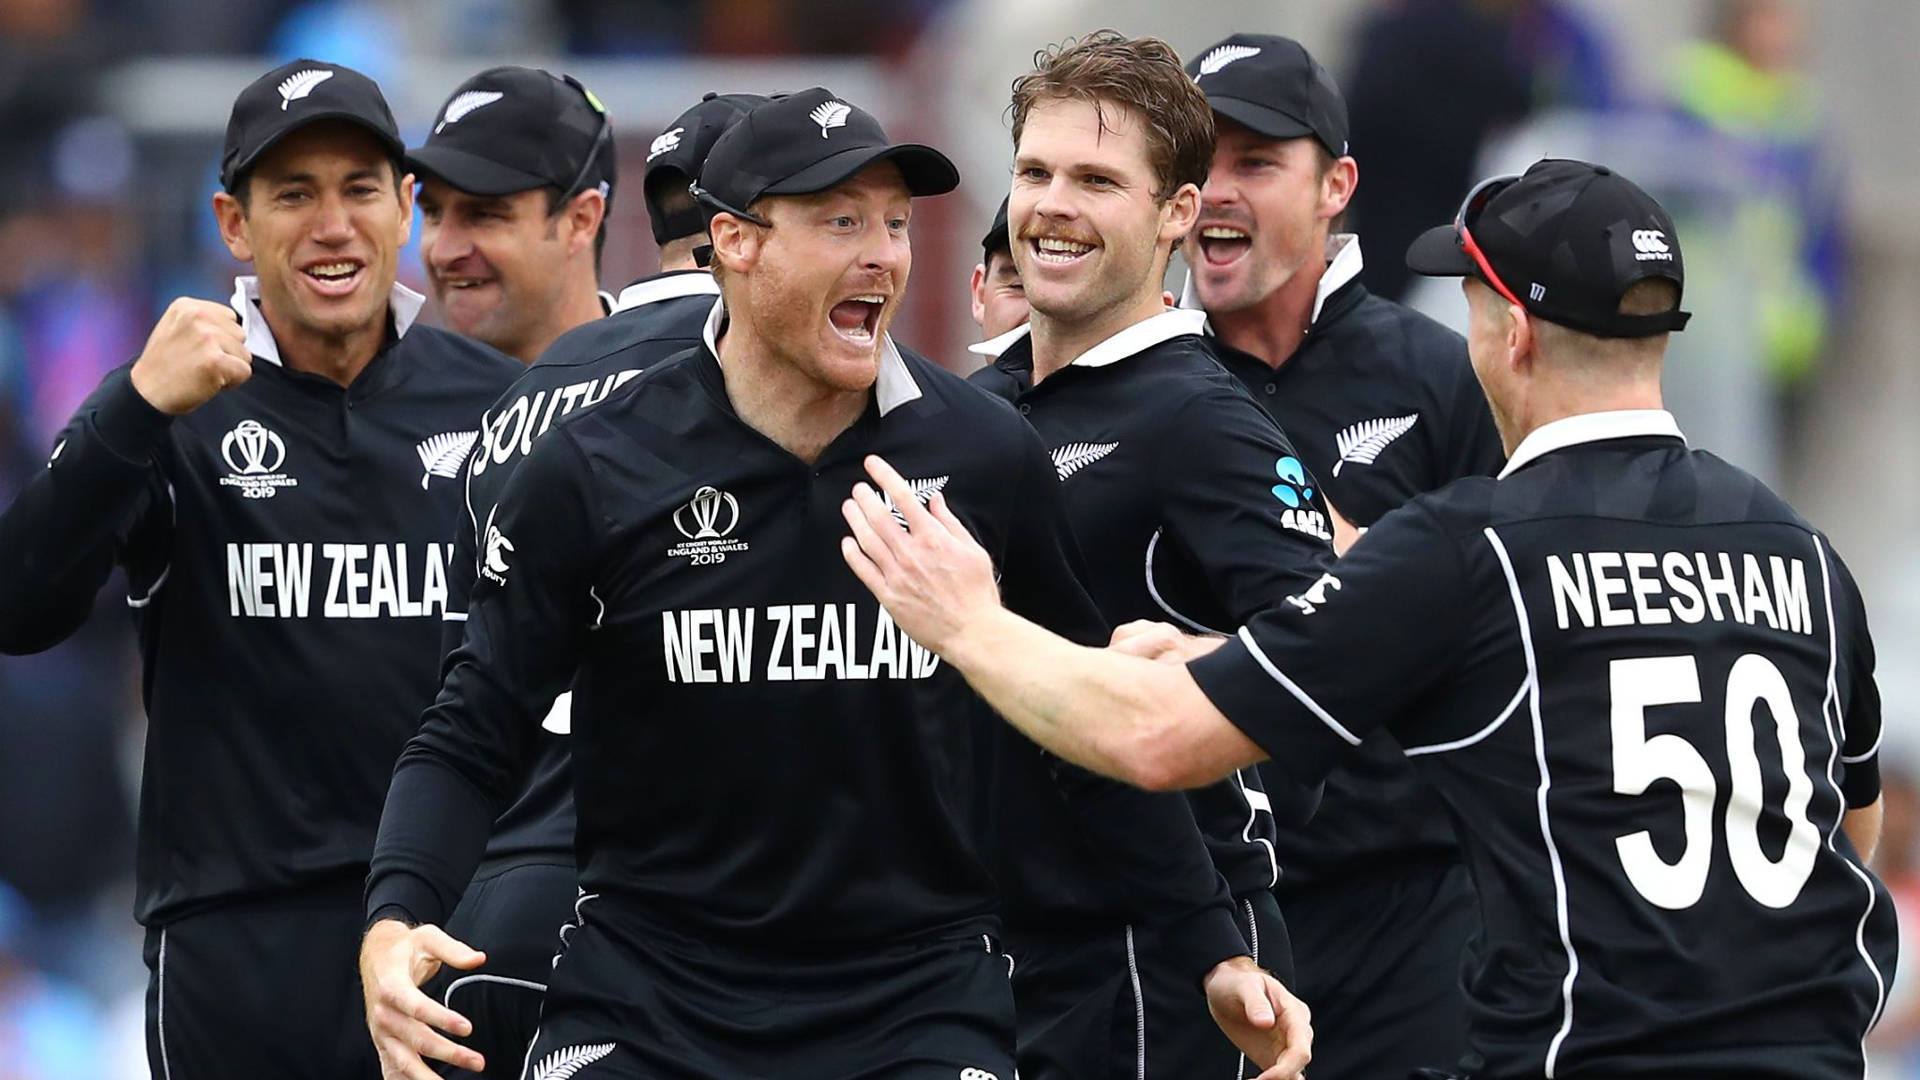 Jubilant New Zealand Cricket Team celebrating a victory Wallpaper